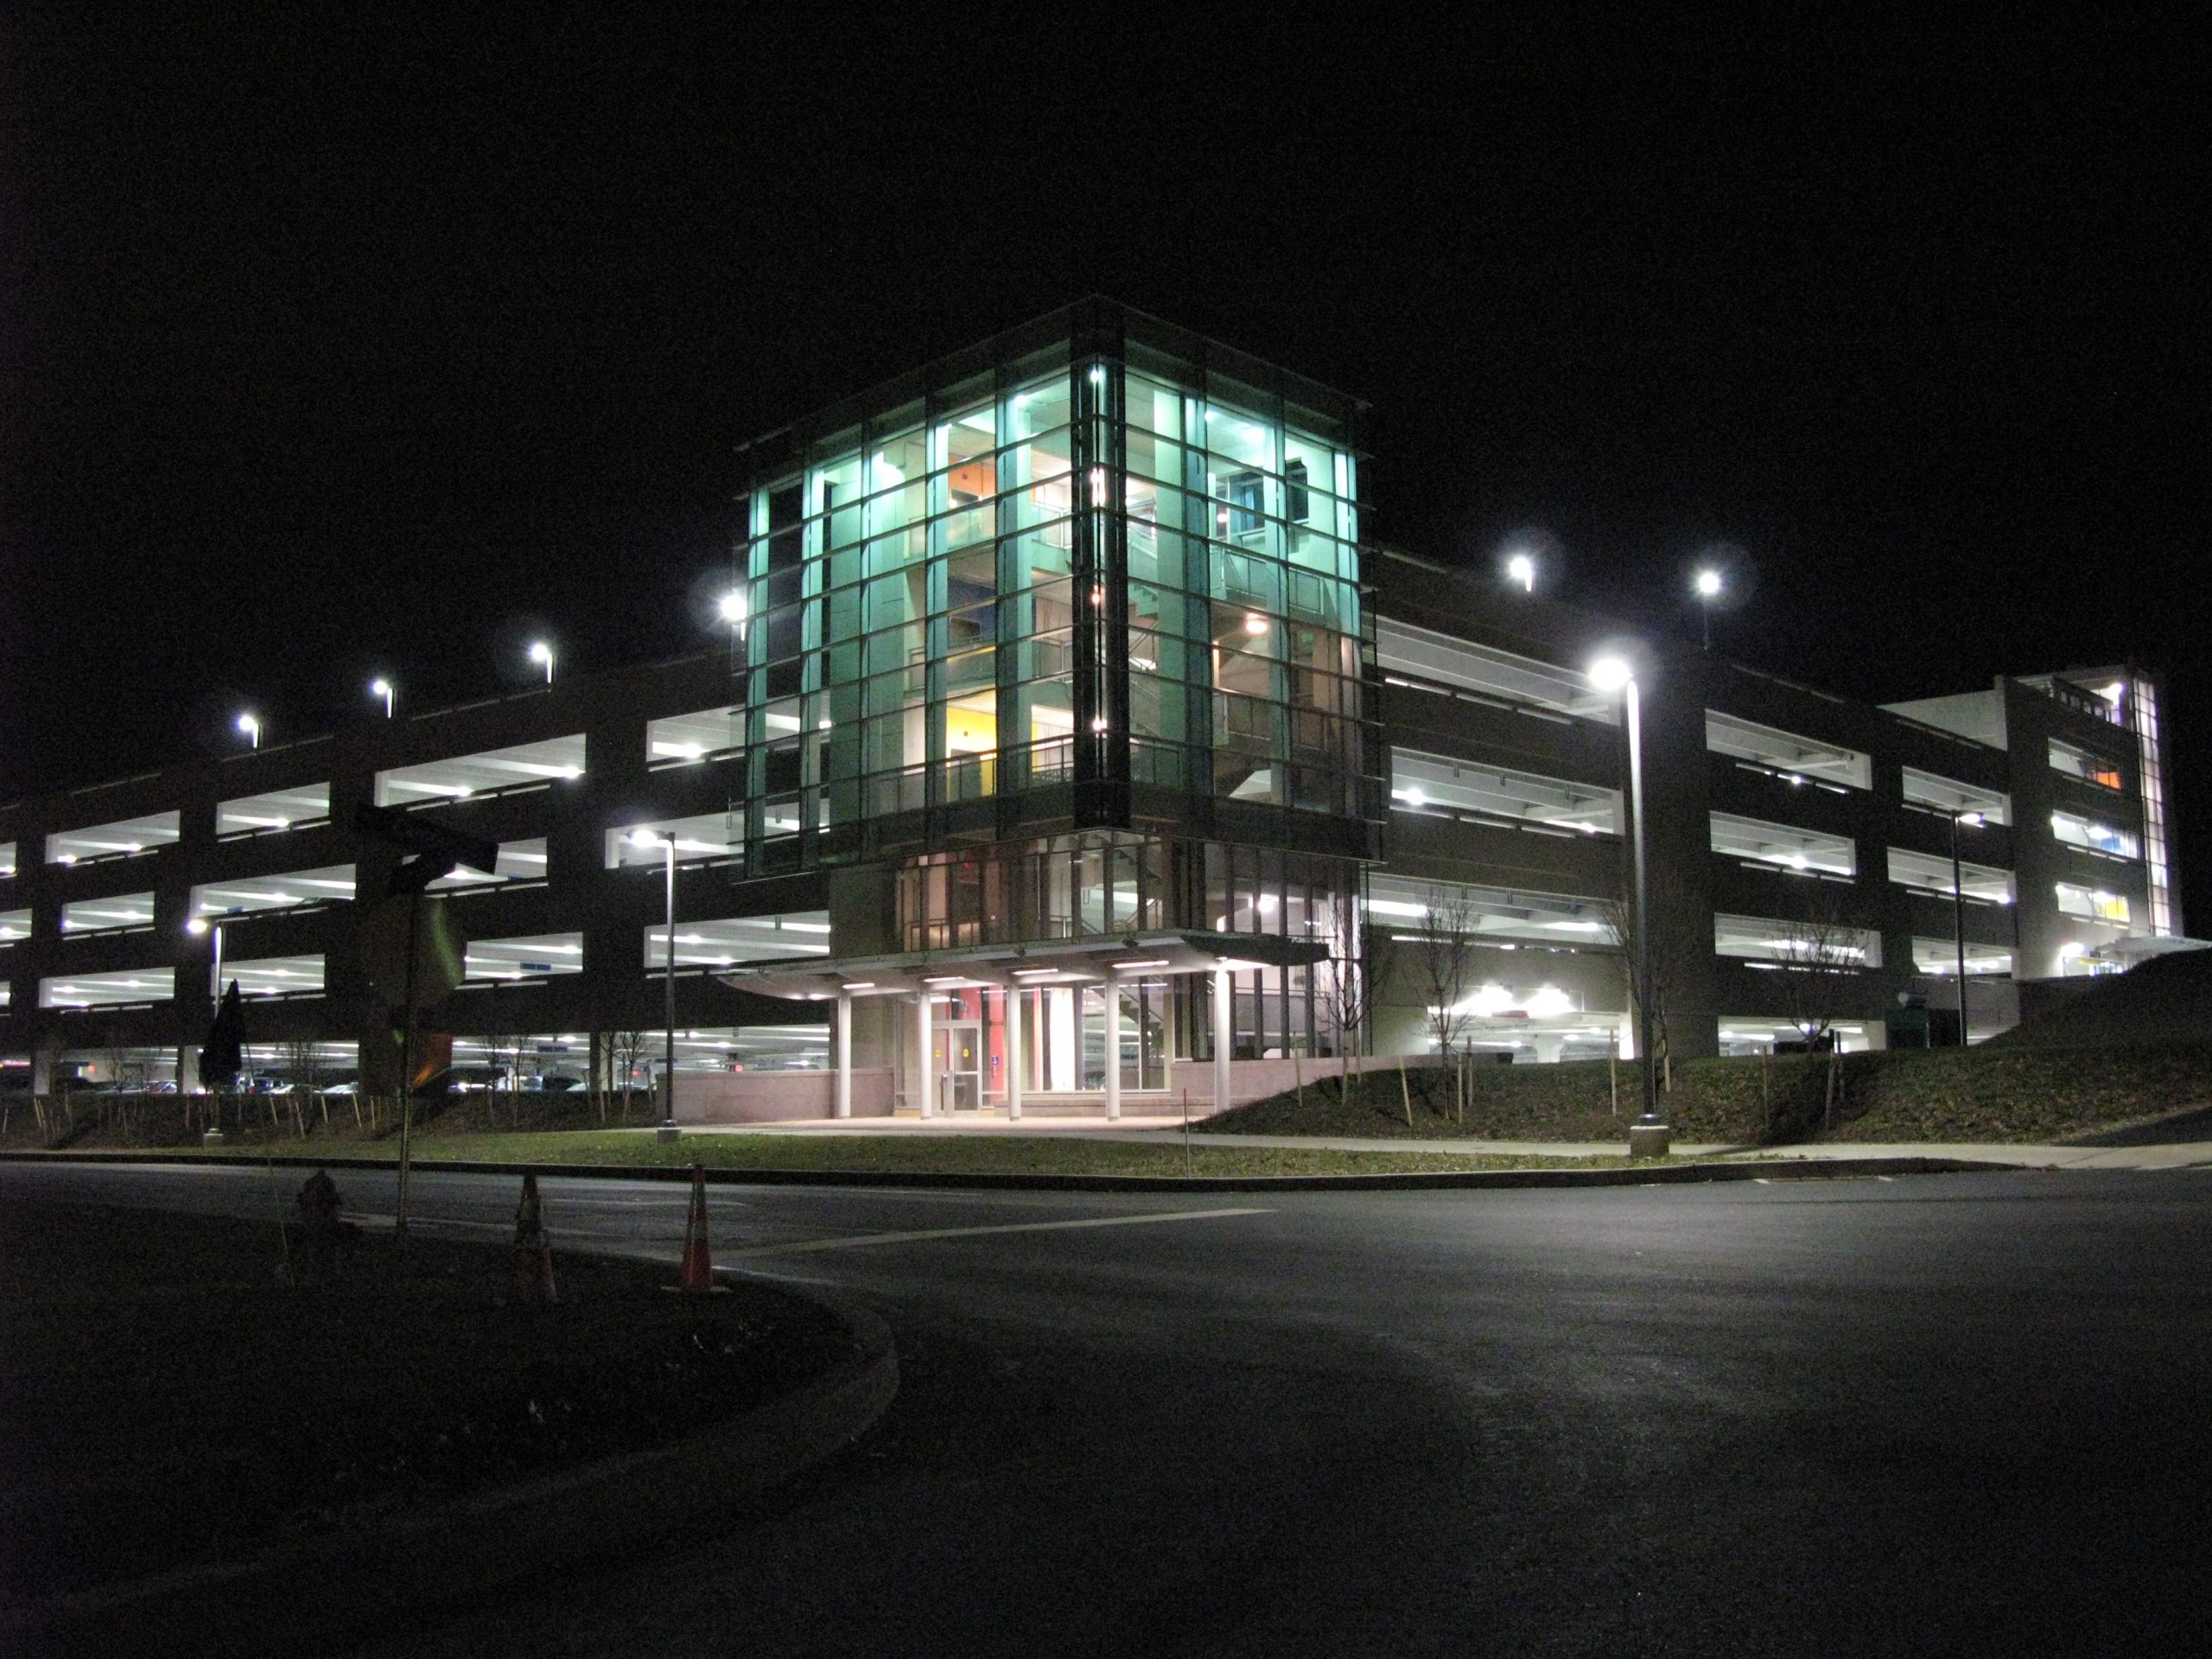 Hershey Medical Center Parking Garage